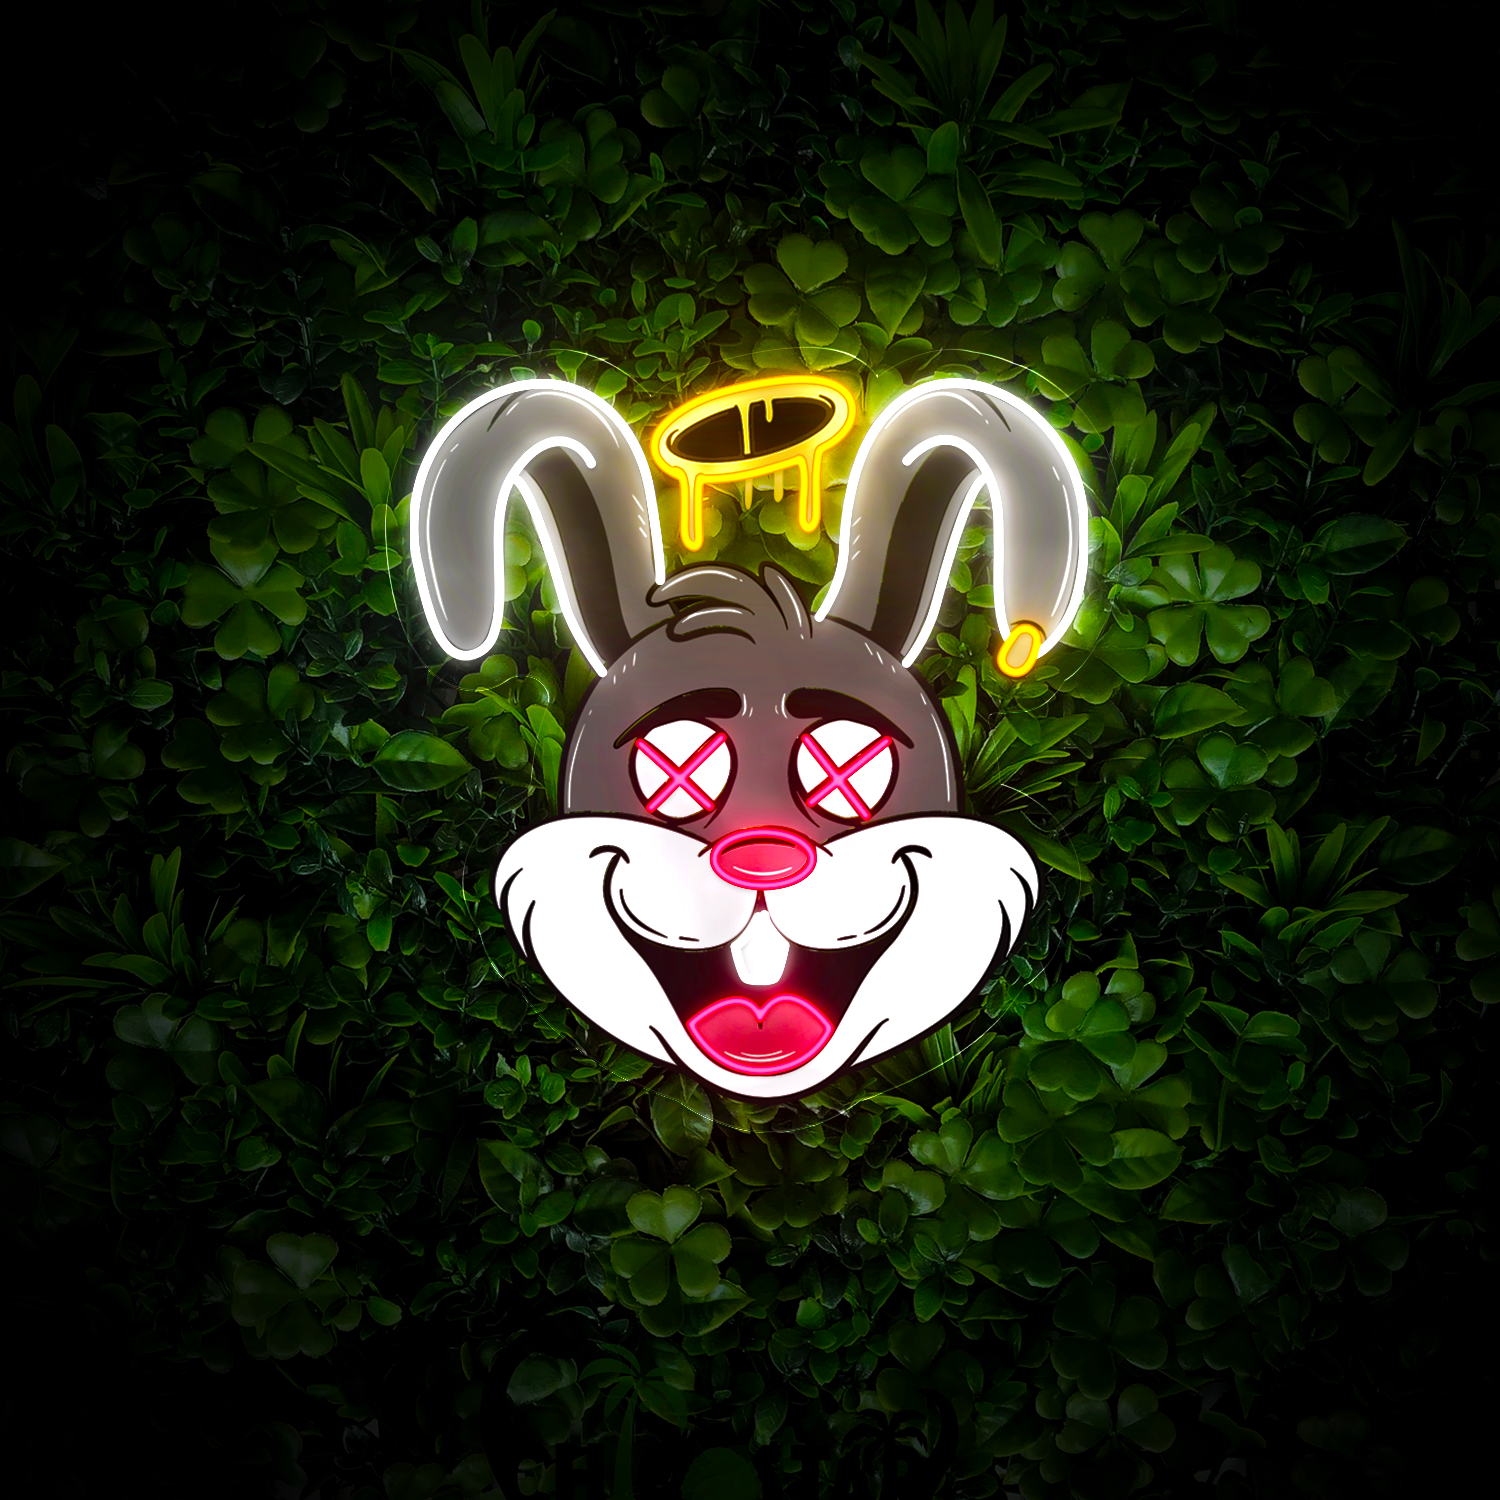 Dead Rabbit Artwork Neon Sign